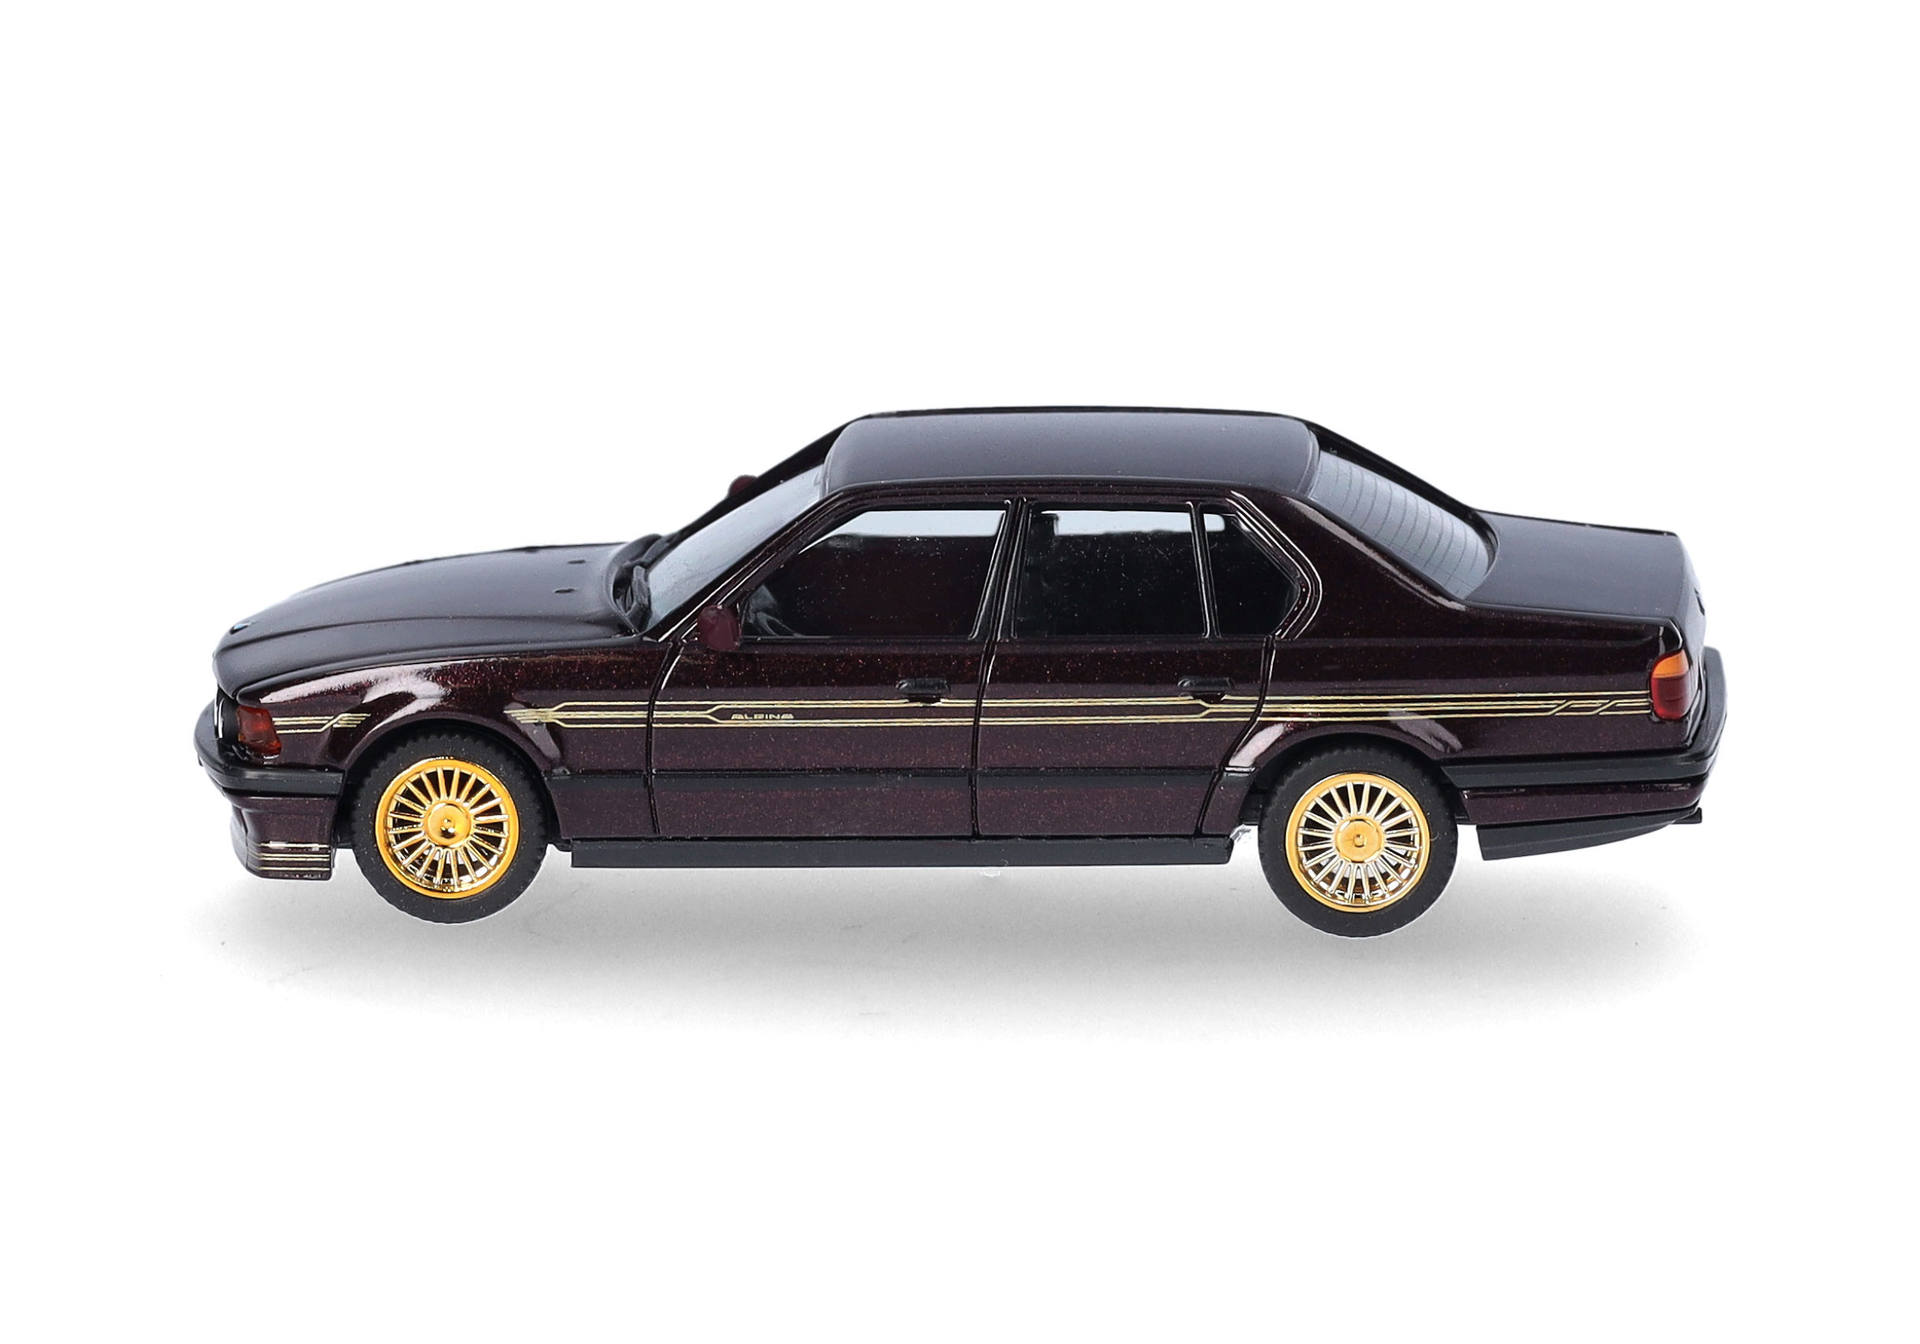 BMW Alpina B11 3,5-Liter, burgundrot metallic, Dekor gold